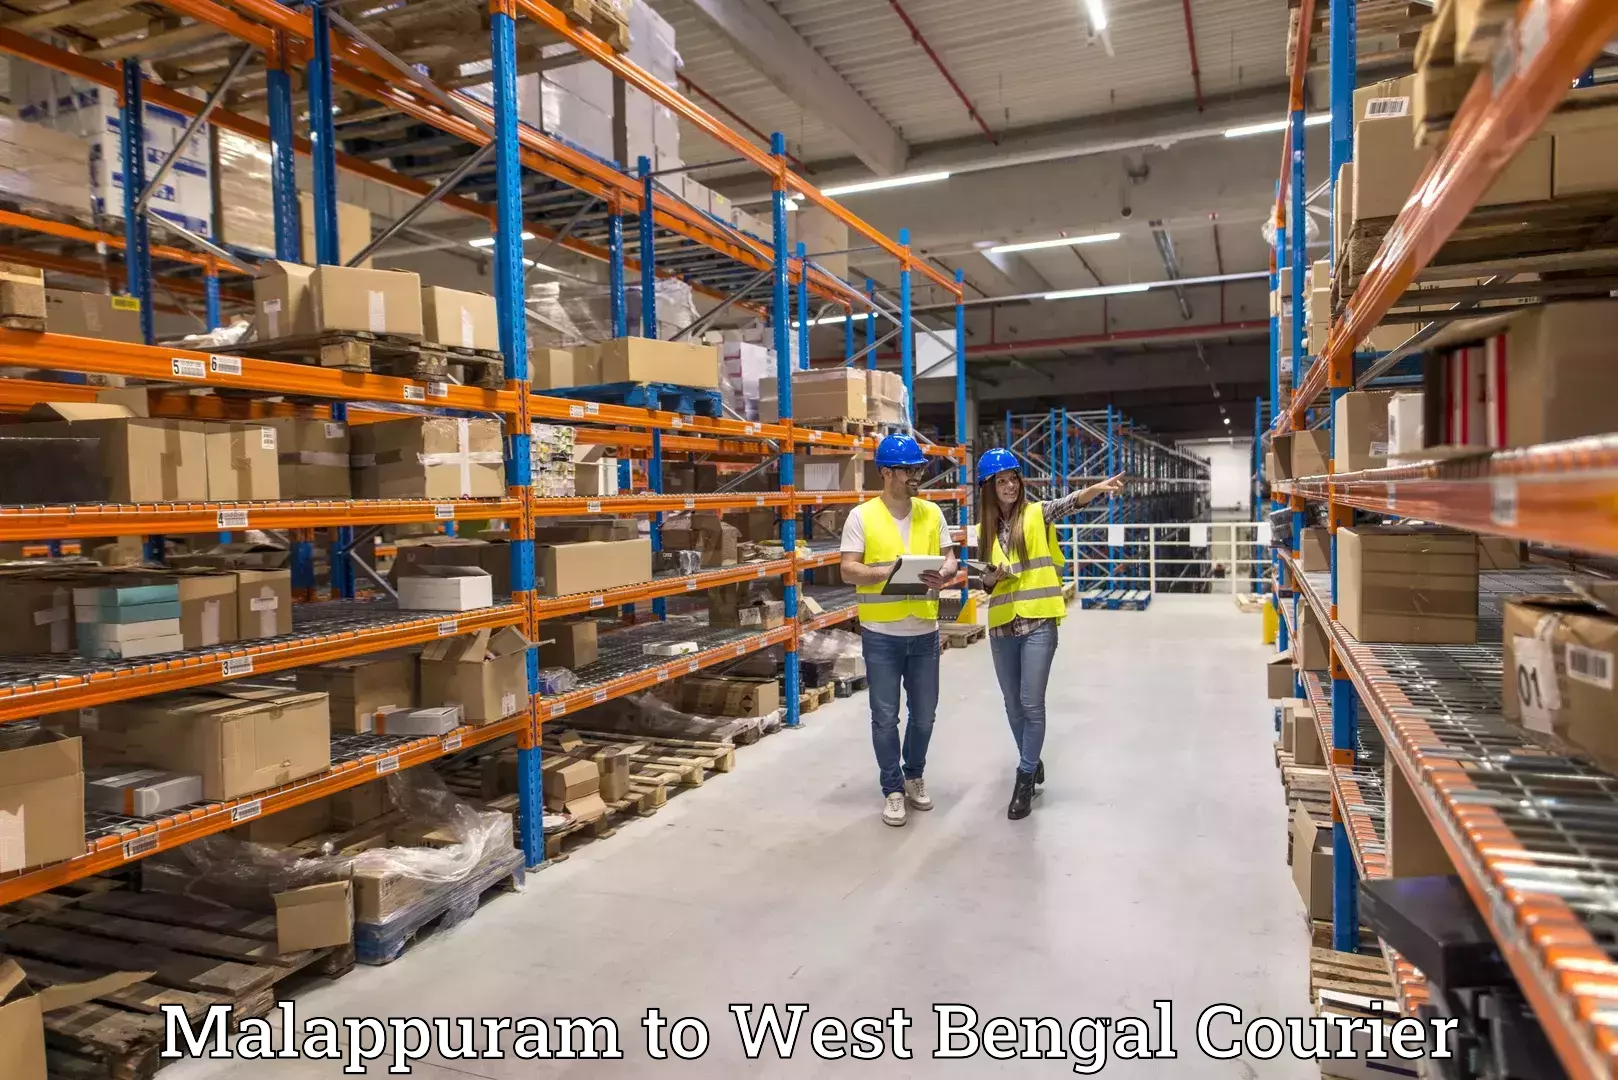 Global logistics network Malappuram to Para Purulia